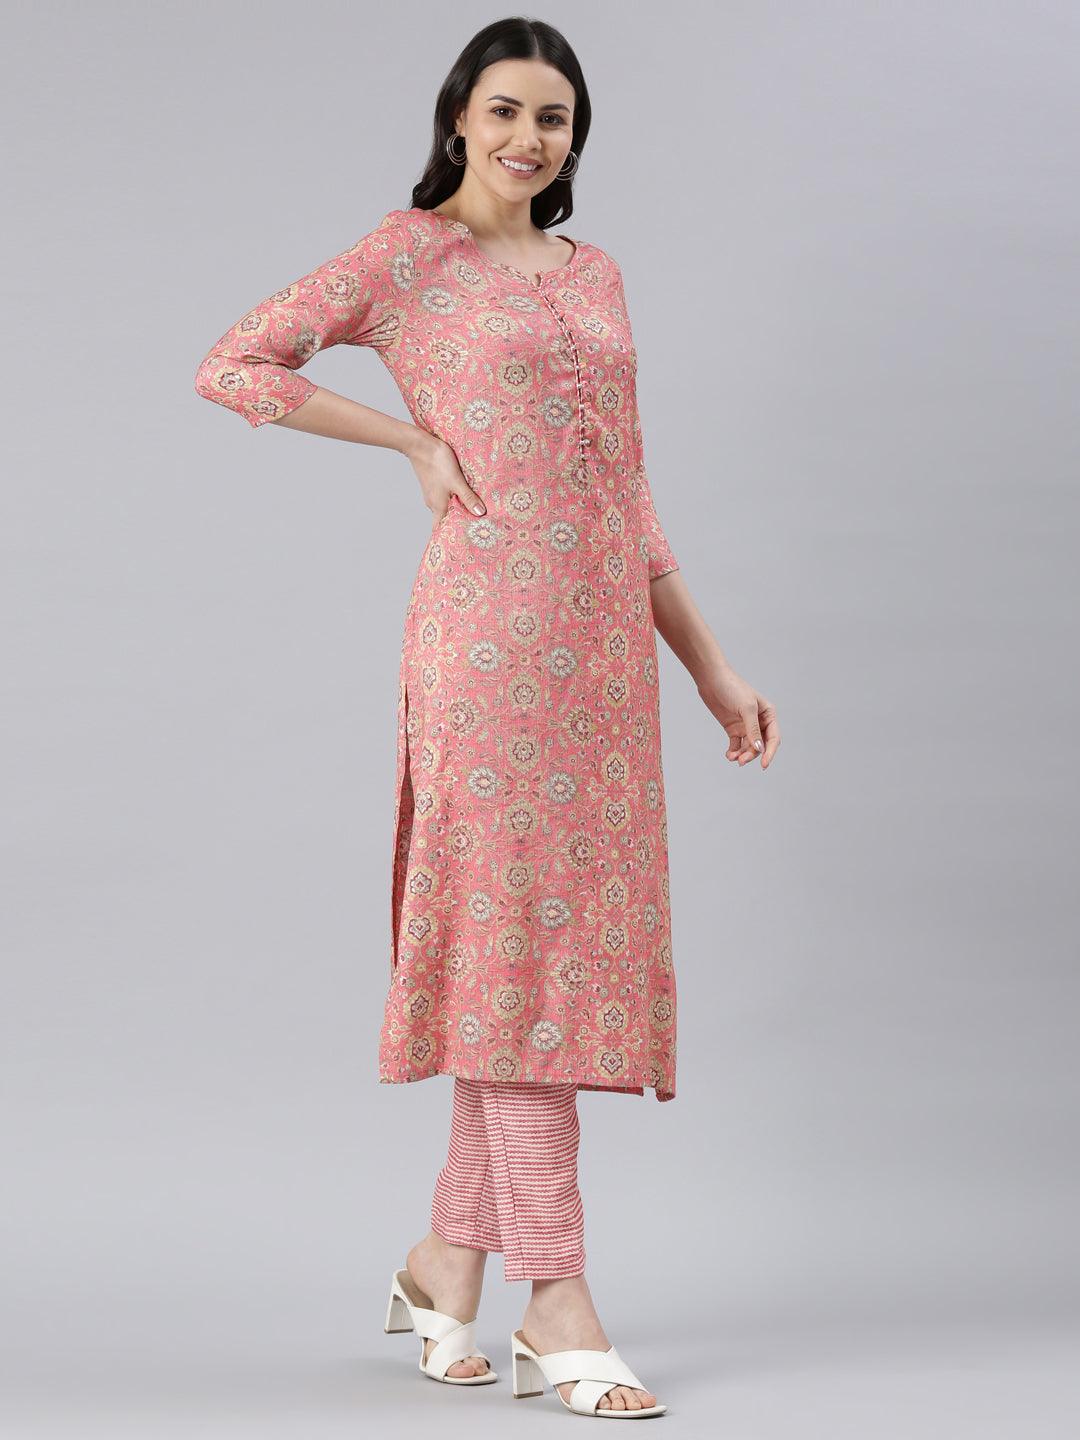 S-5XL cotton flex ₹1010/- free COD WhatsApp +919730930485 | Stylish plus  size clothing, Cotton kurti designs, Kurta designs women